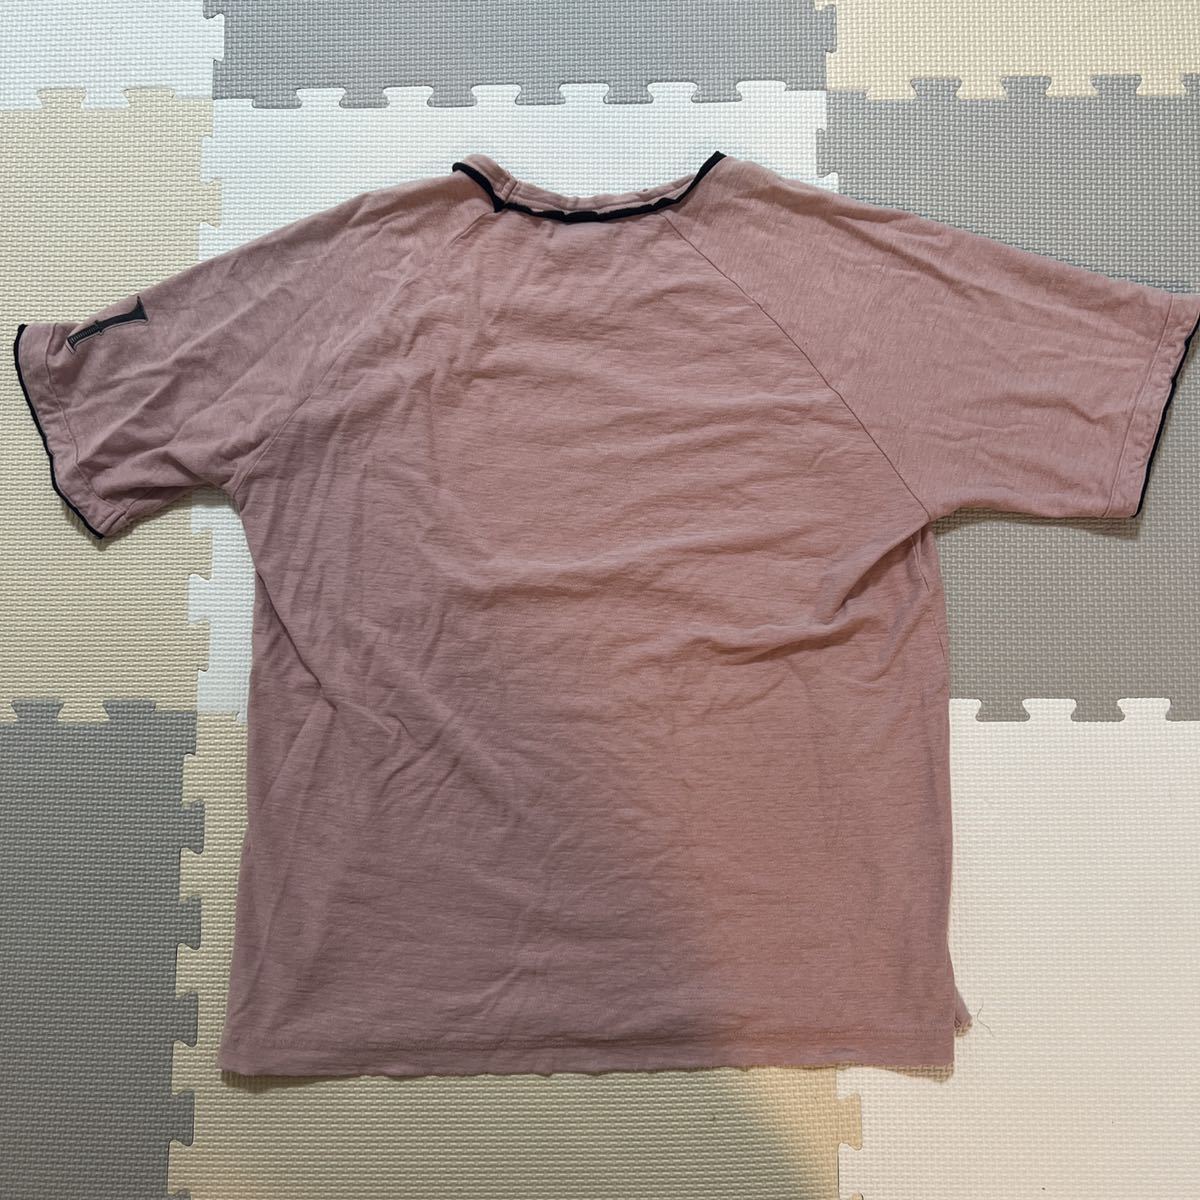 nexusvii Tシャツ サイズM ピンク 切りっぱなし加工 nexus7 ネクサス7 ネクサスセブン 無地T ラグラン_画像5